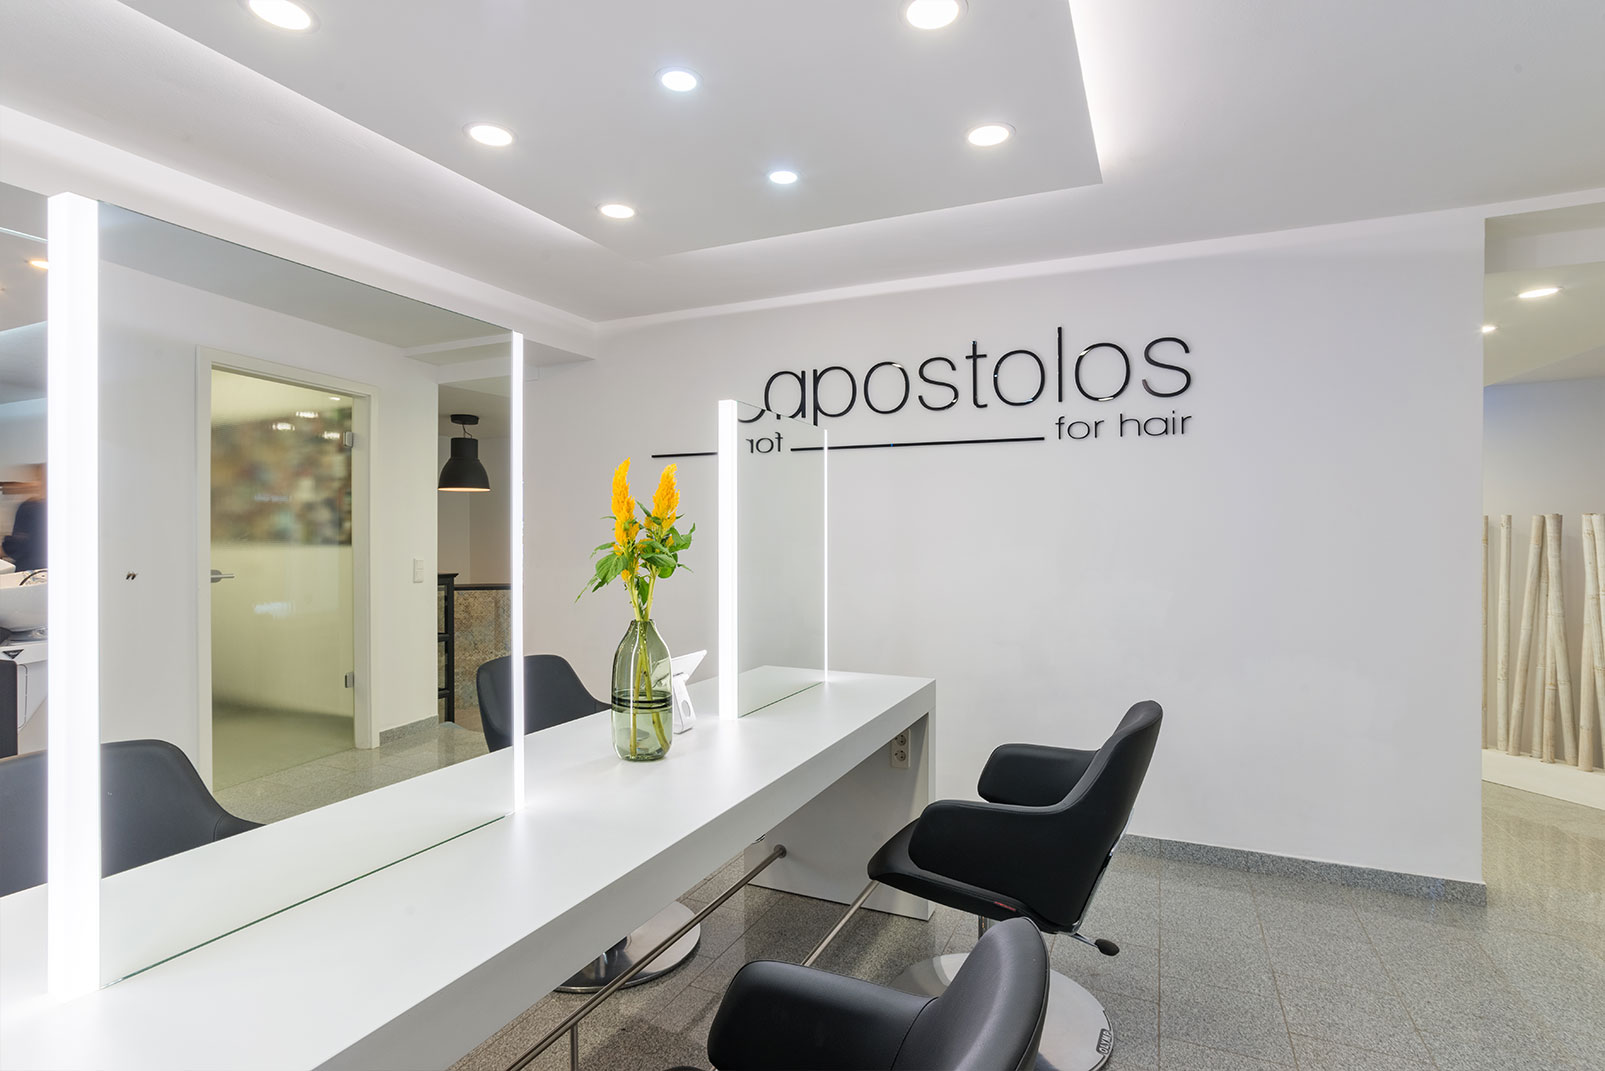 Apostolos for hair